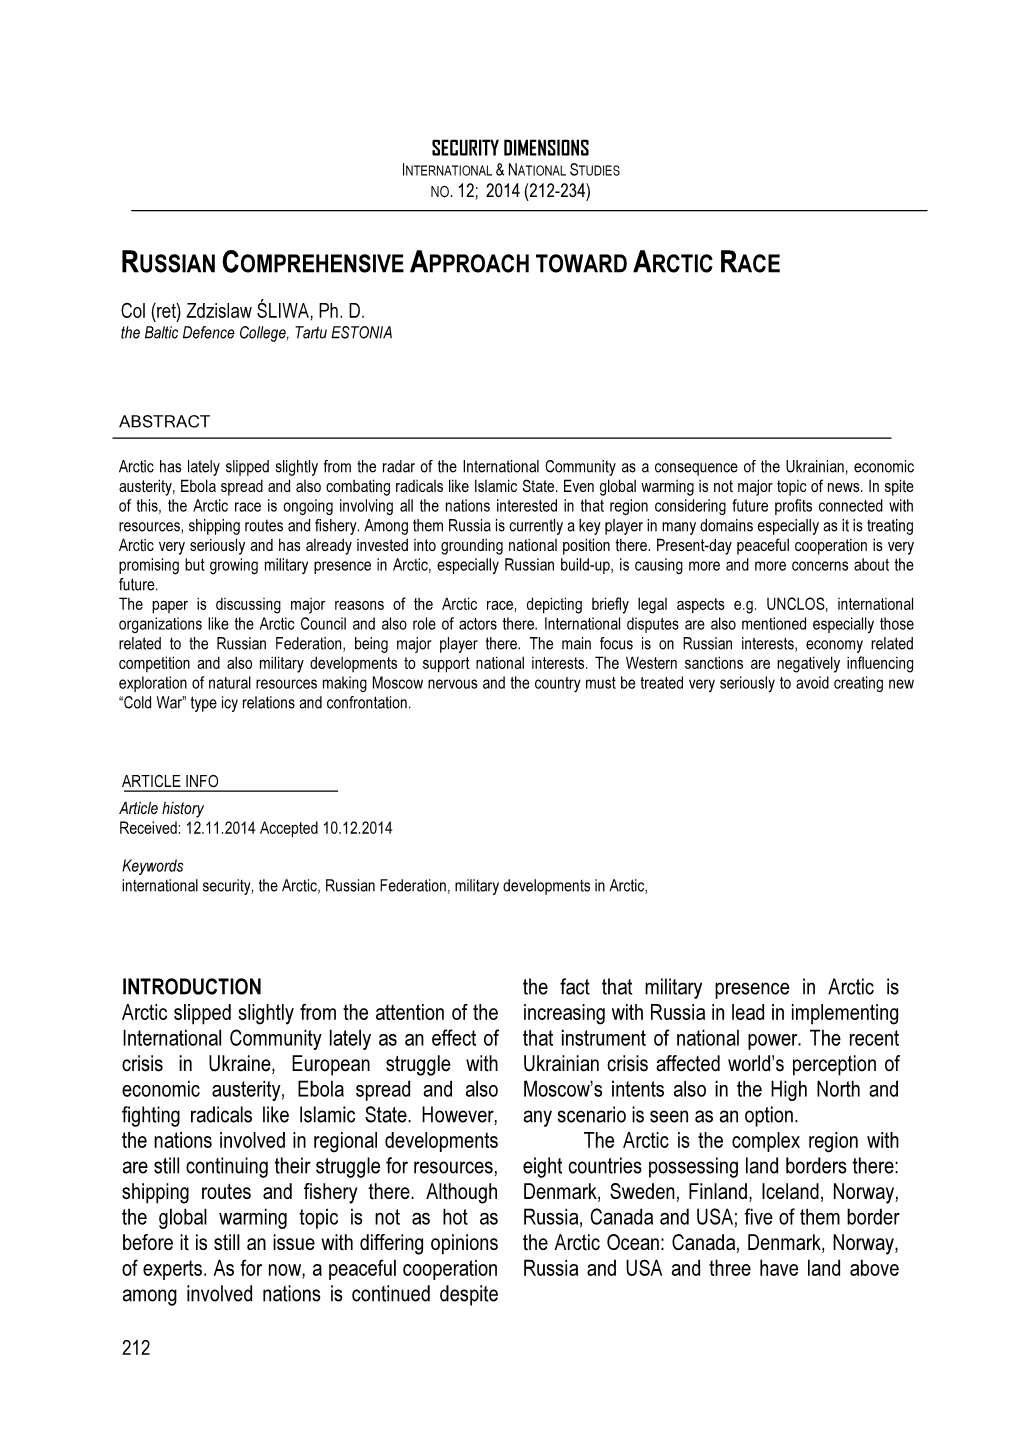 Russian Comprehensive Approach Toward Arctic Race